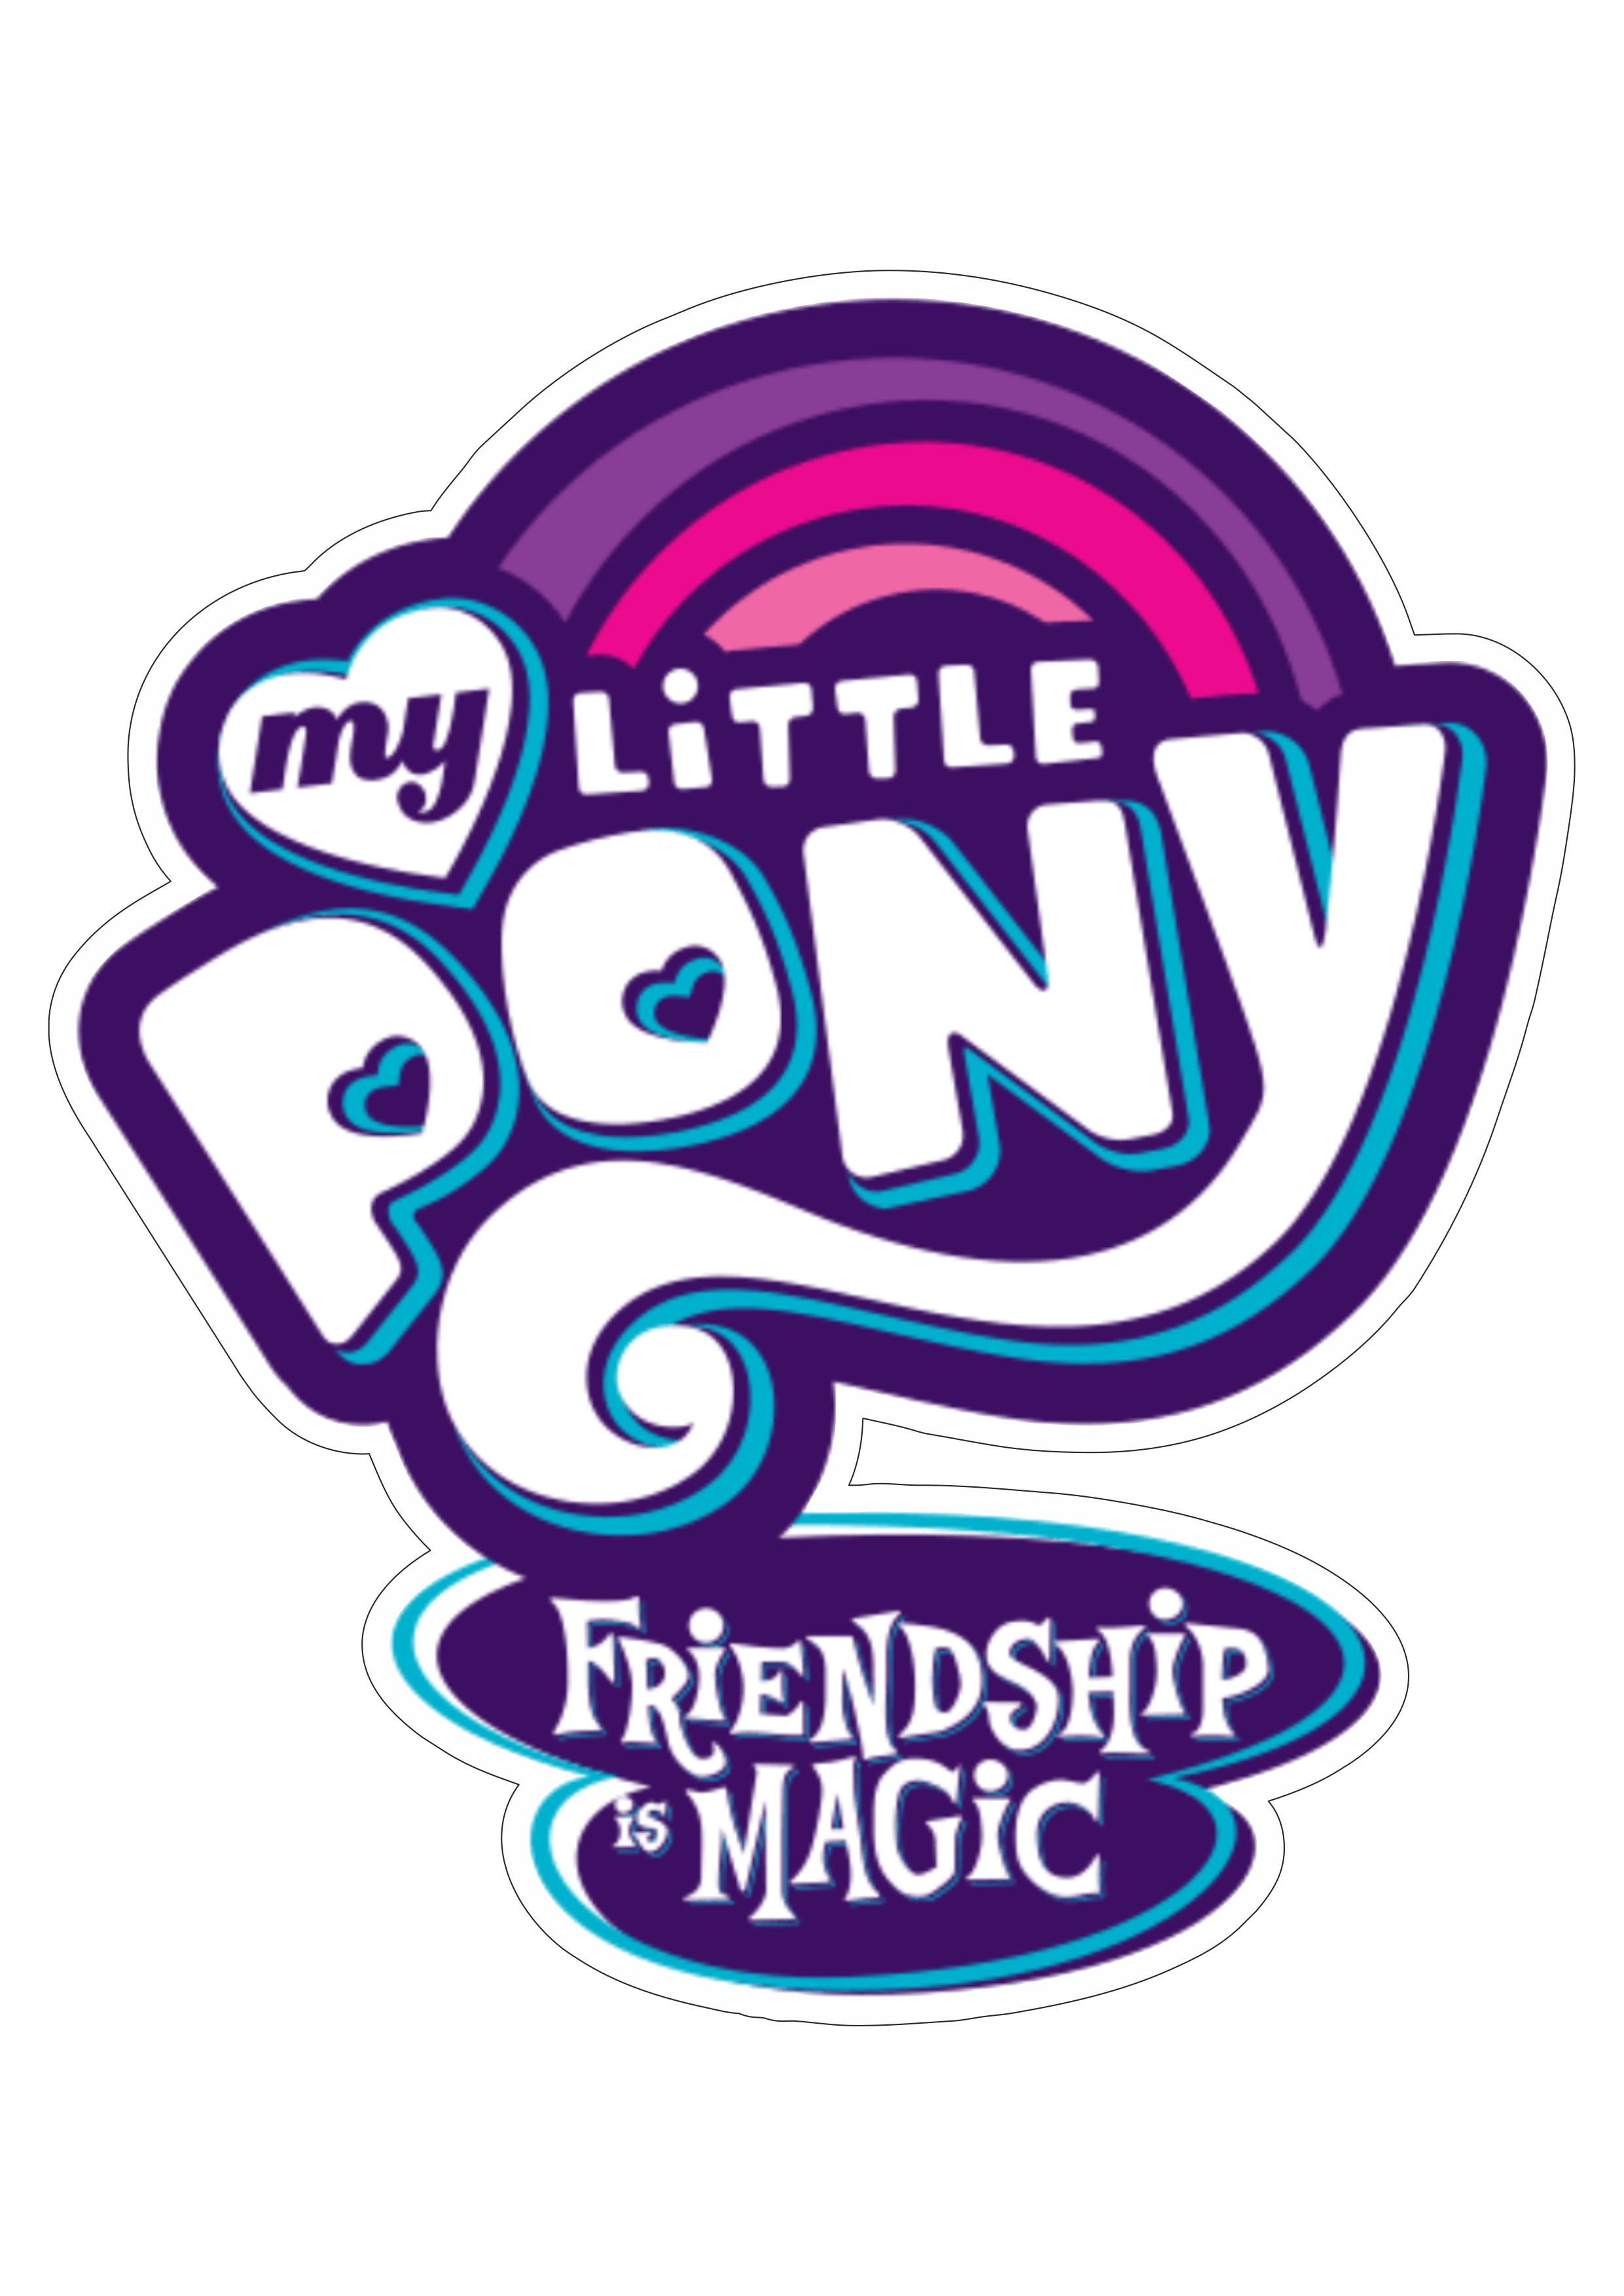 My little pony logo imagem friendship is magic png